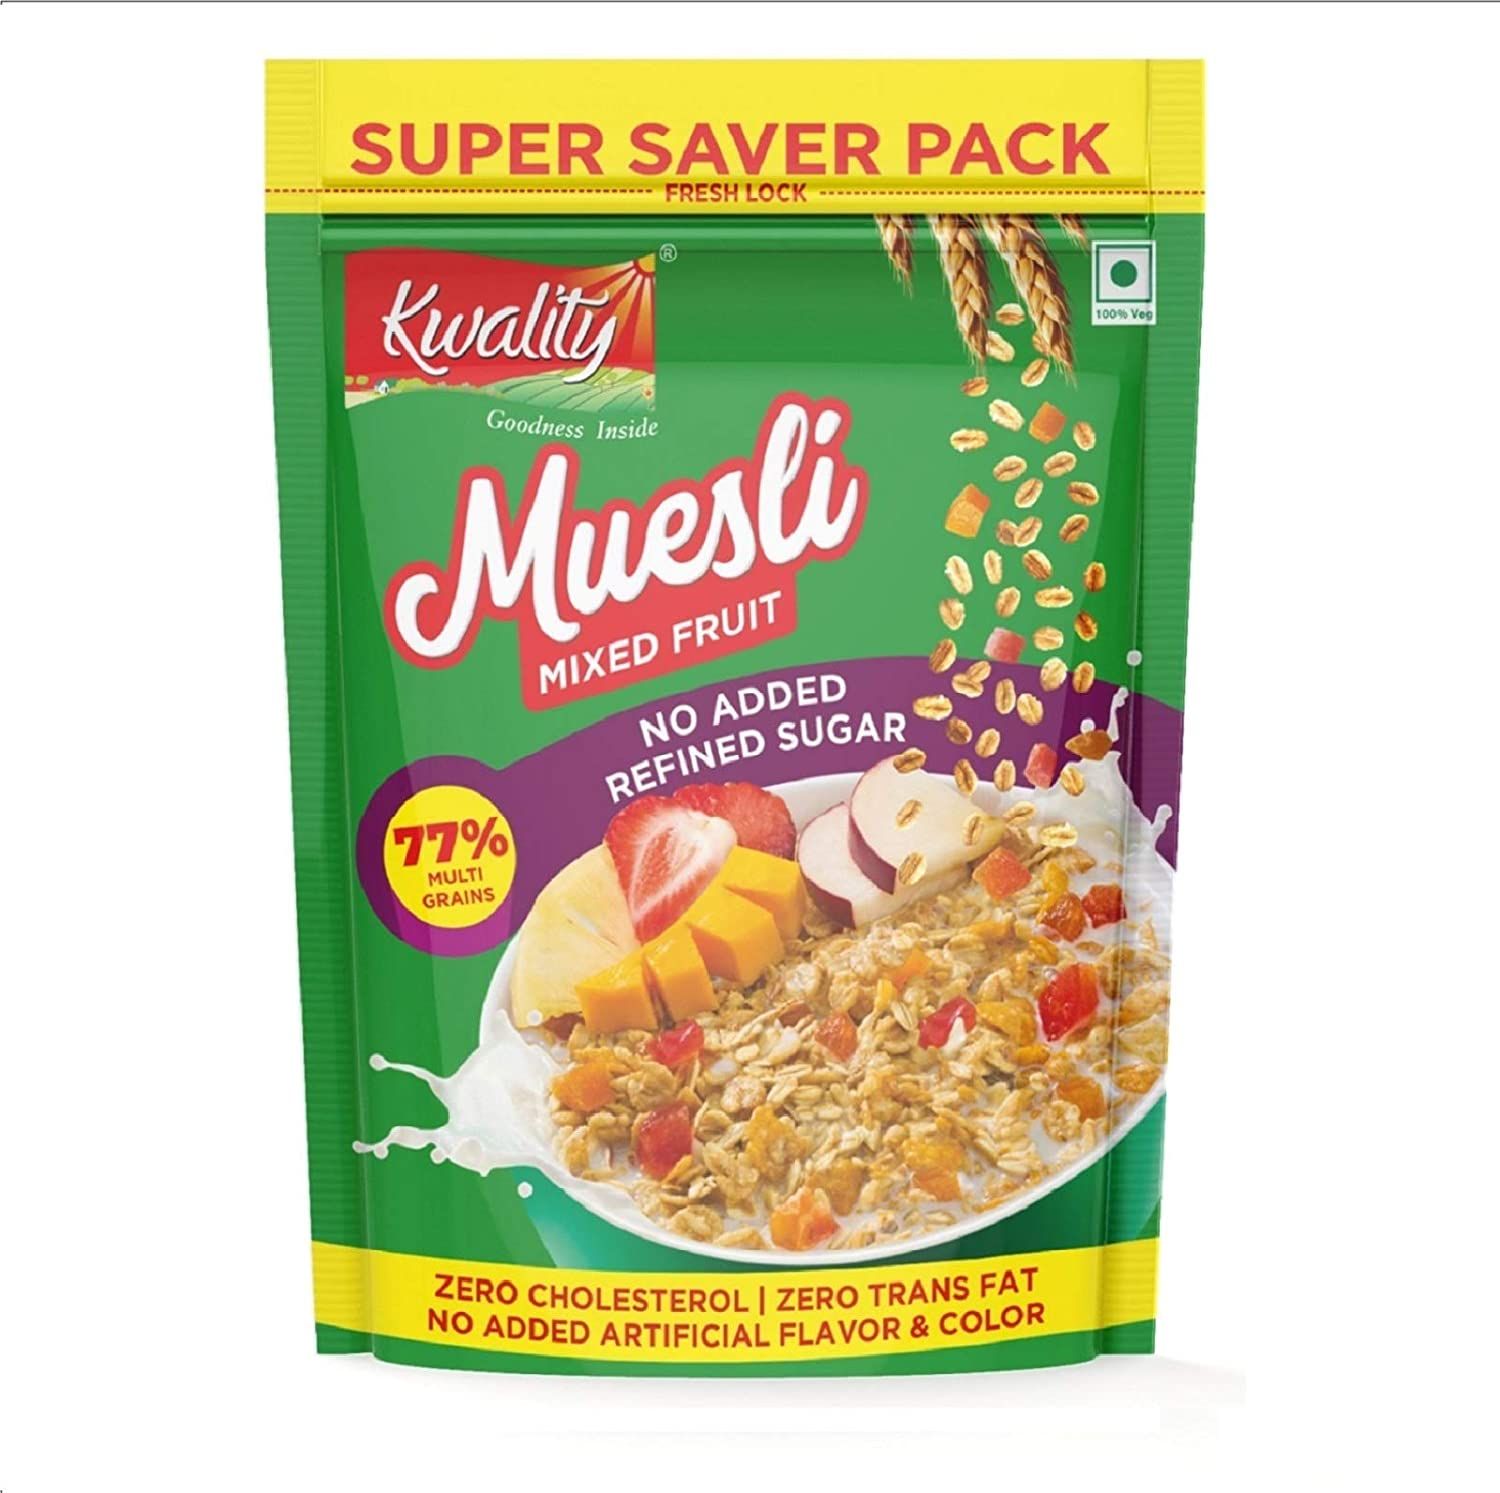 Kwality Muesli Mixed Fruit No Added Refined Sugar Image